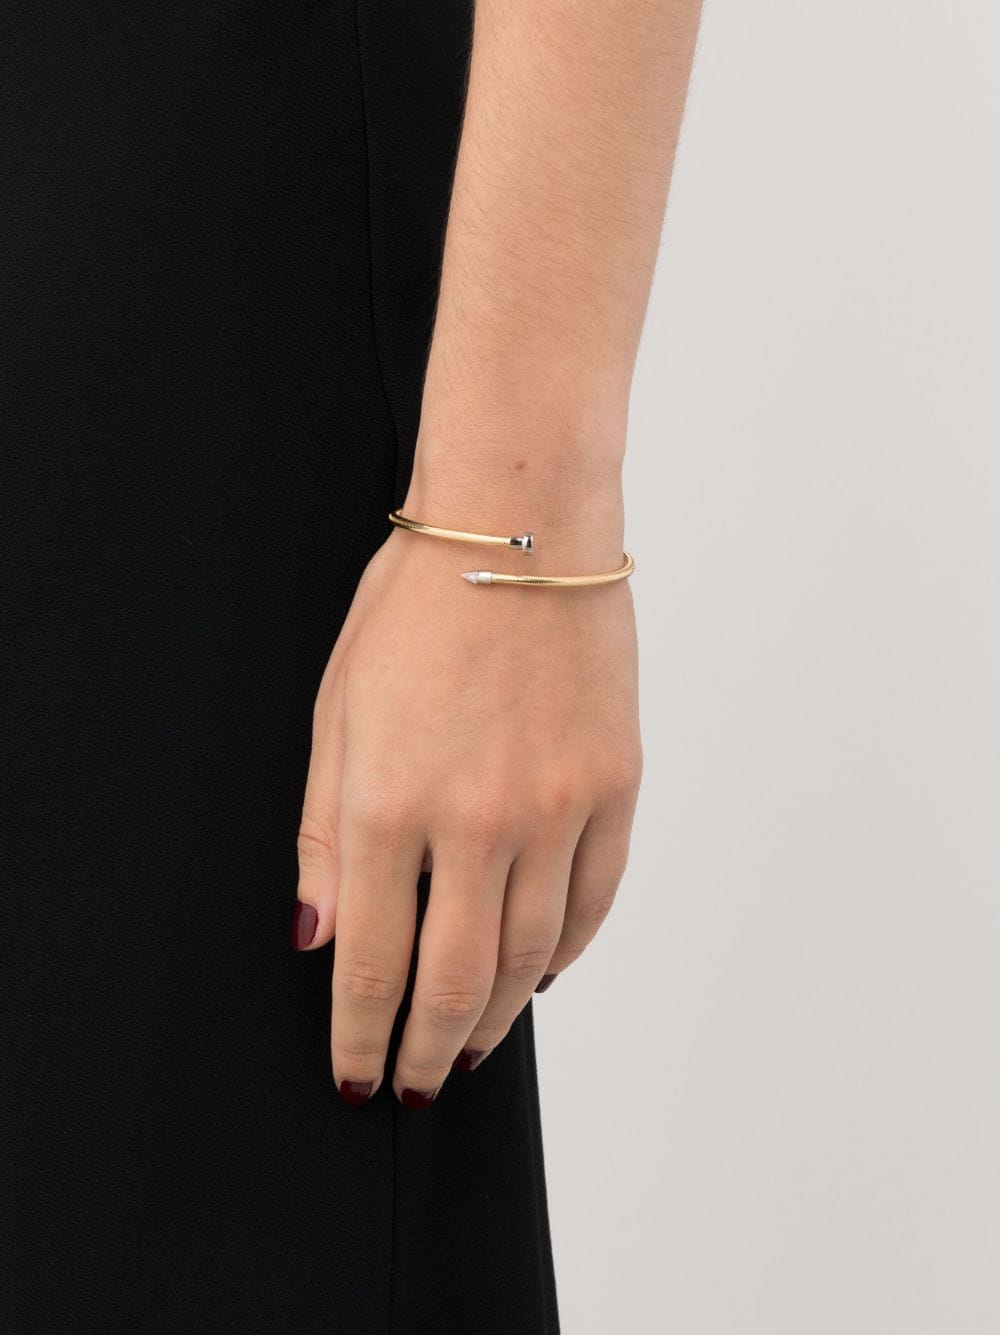 PONTE VECCHIO 18kt yellow gold Nobile diamond bracelet - Goud